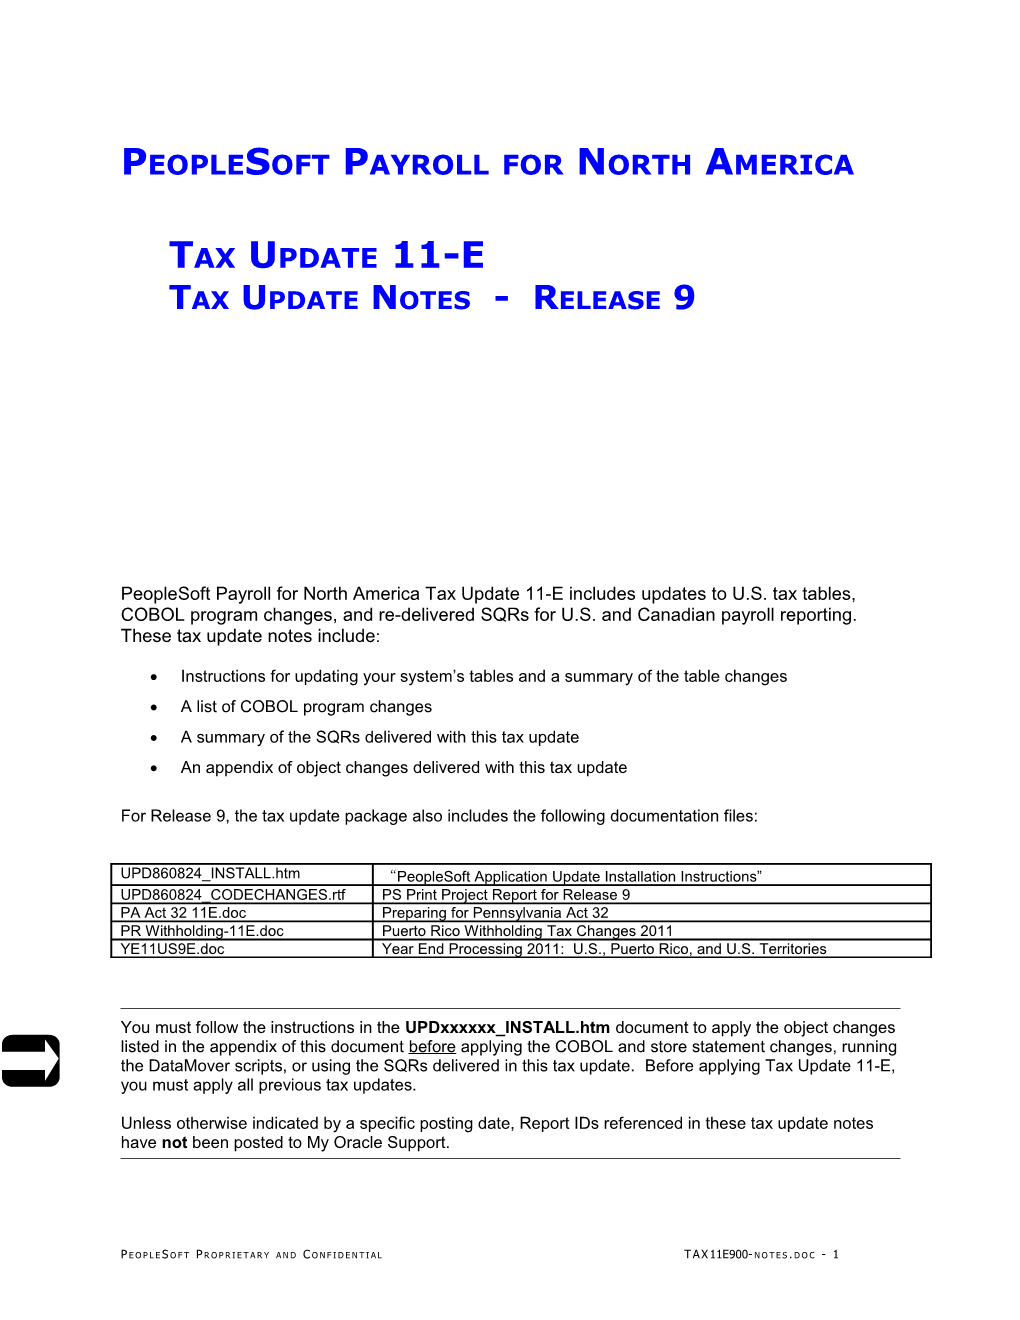 9.00 - Peoplesoft Payroll Tax Update 11-E